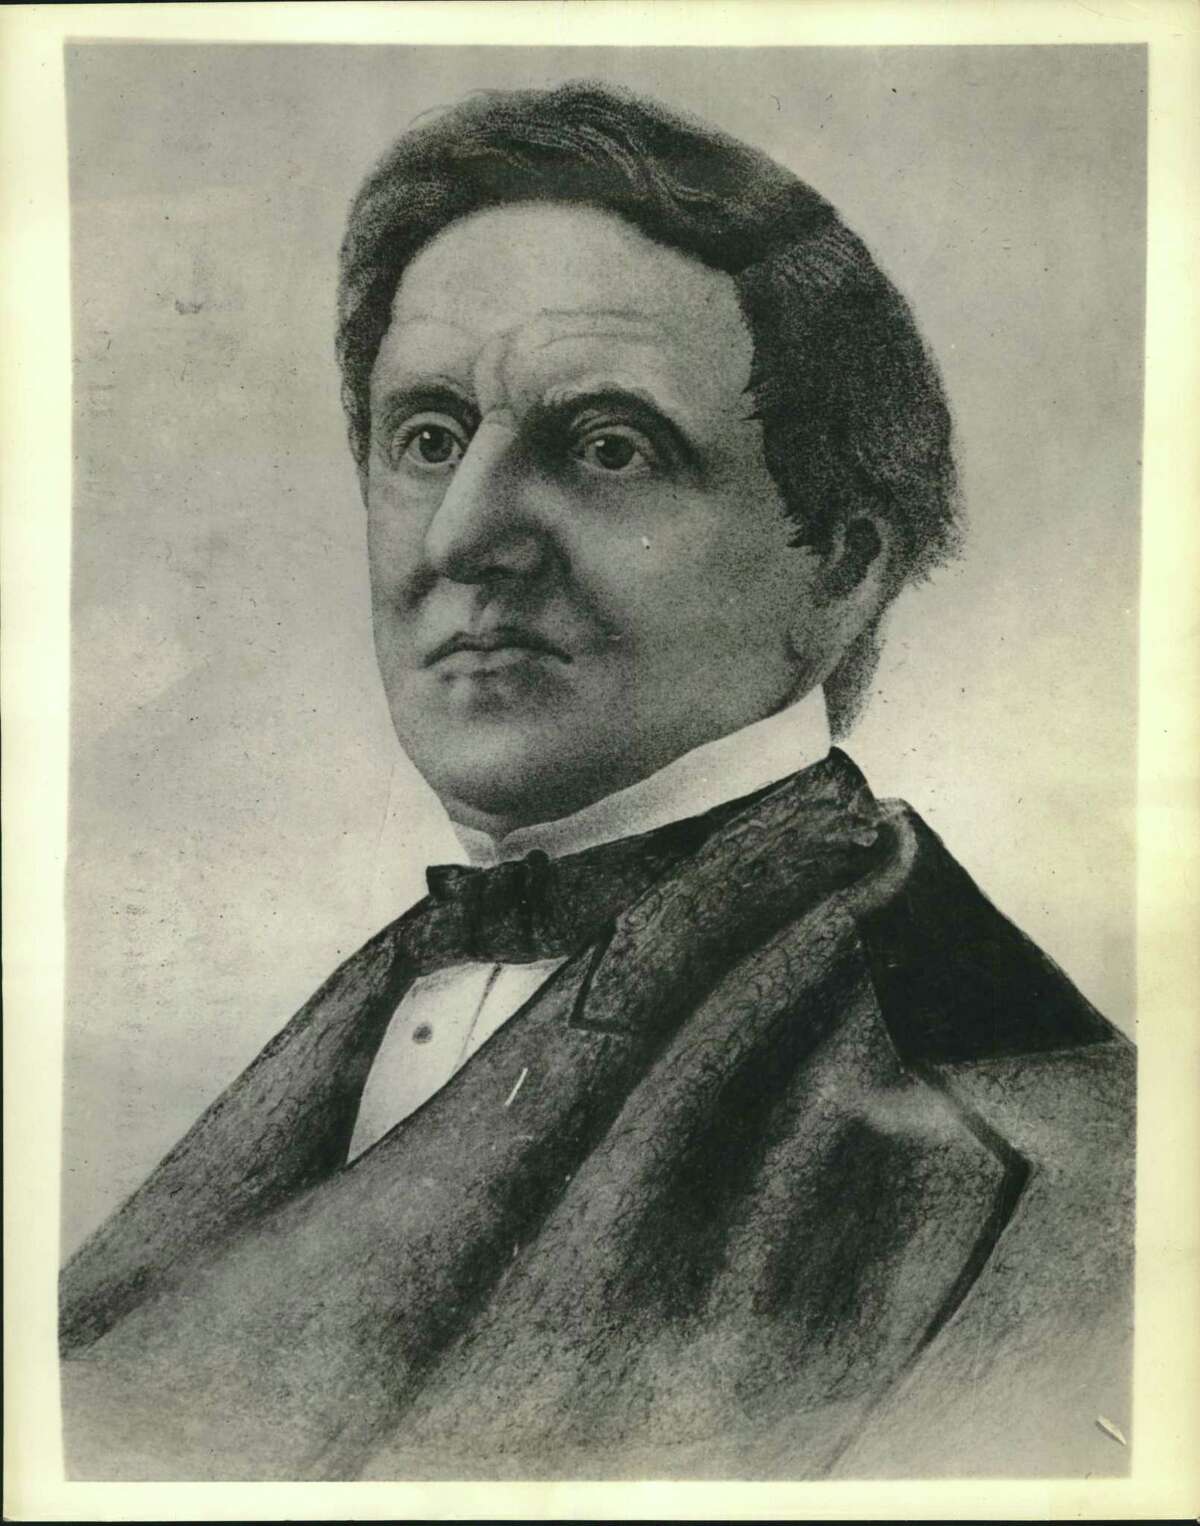 Democrat Samuel J. Tilden, Governor of New York